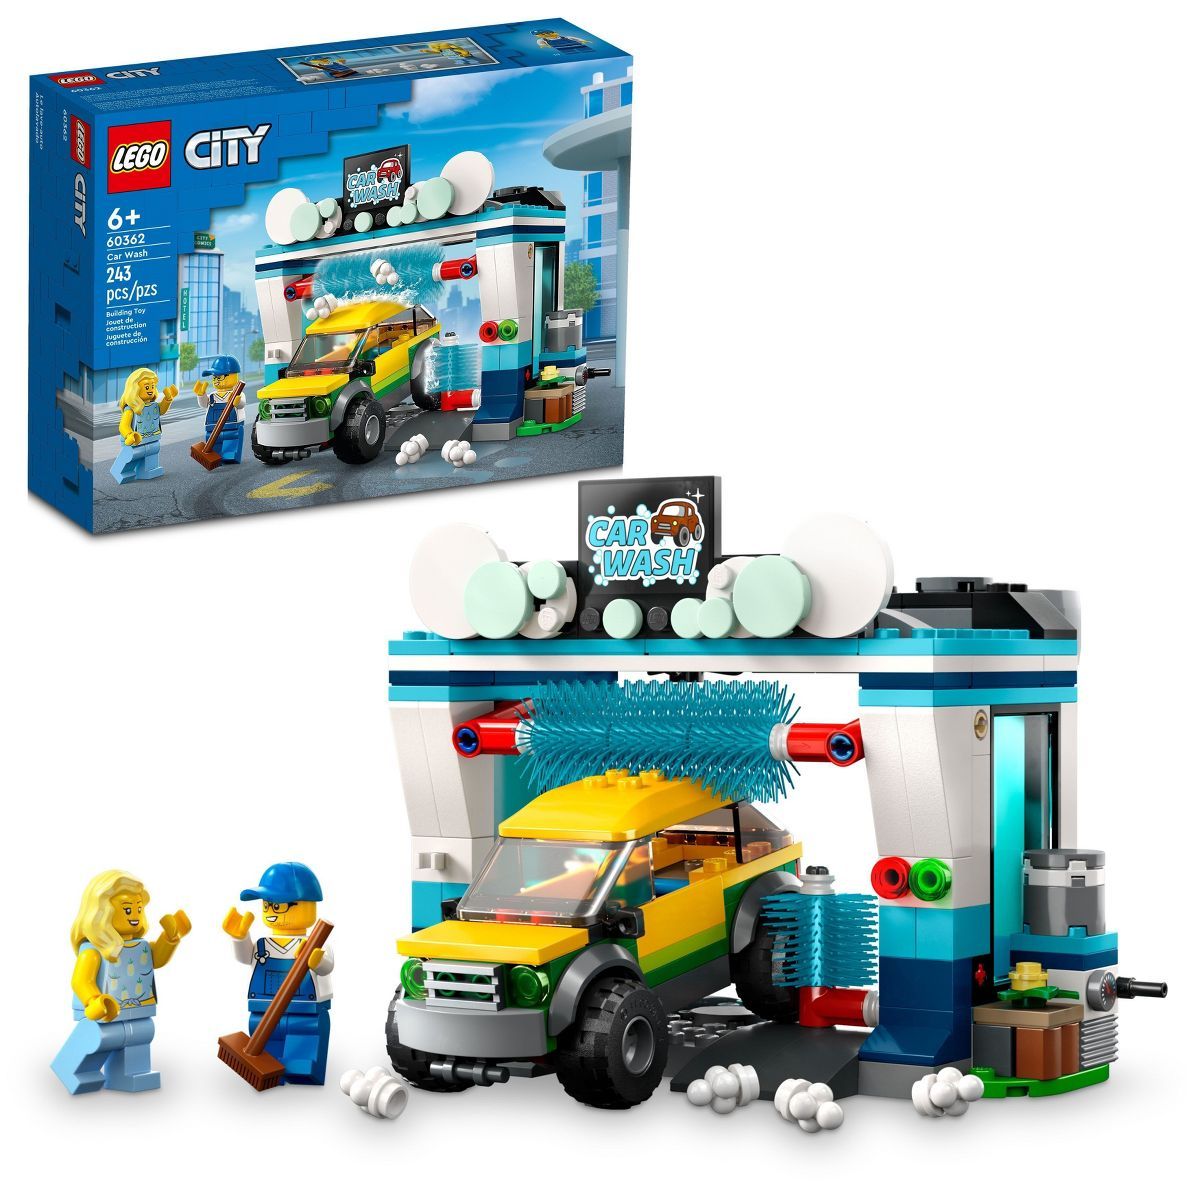 LEGO City Car Wash Pretend Building Toy Set 60362 | Target